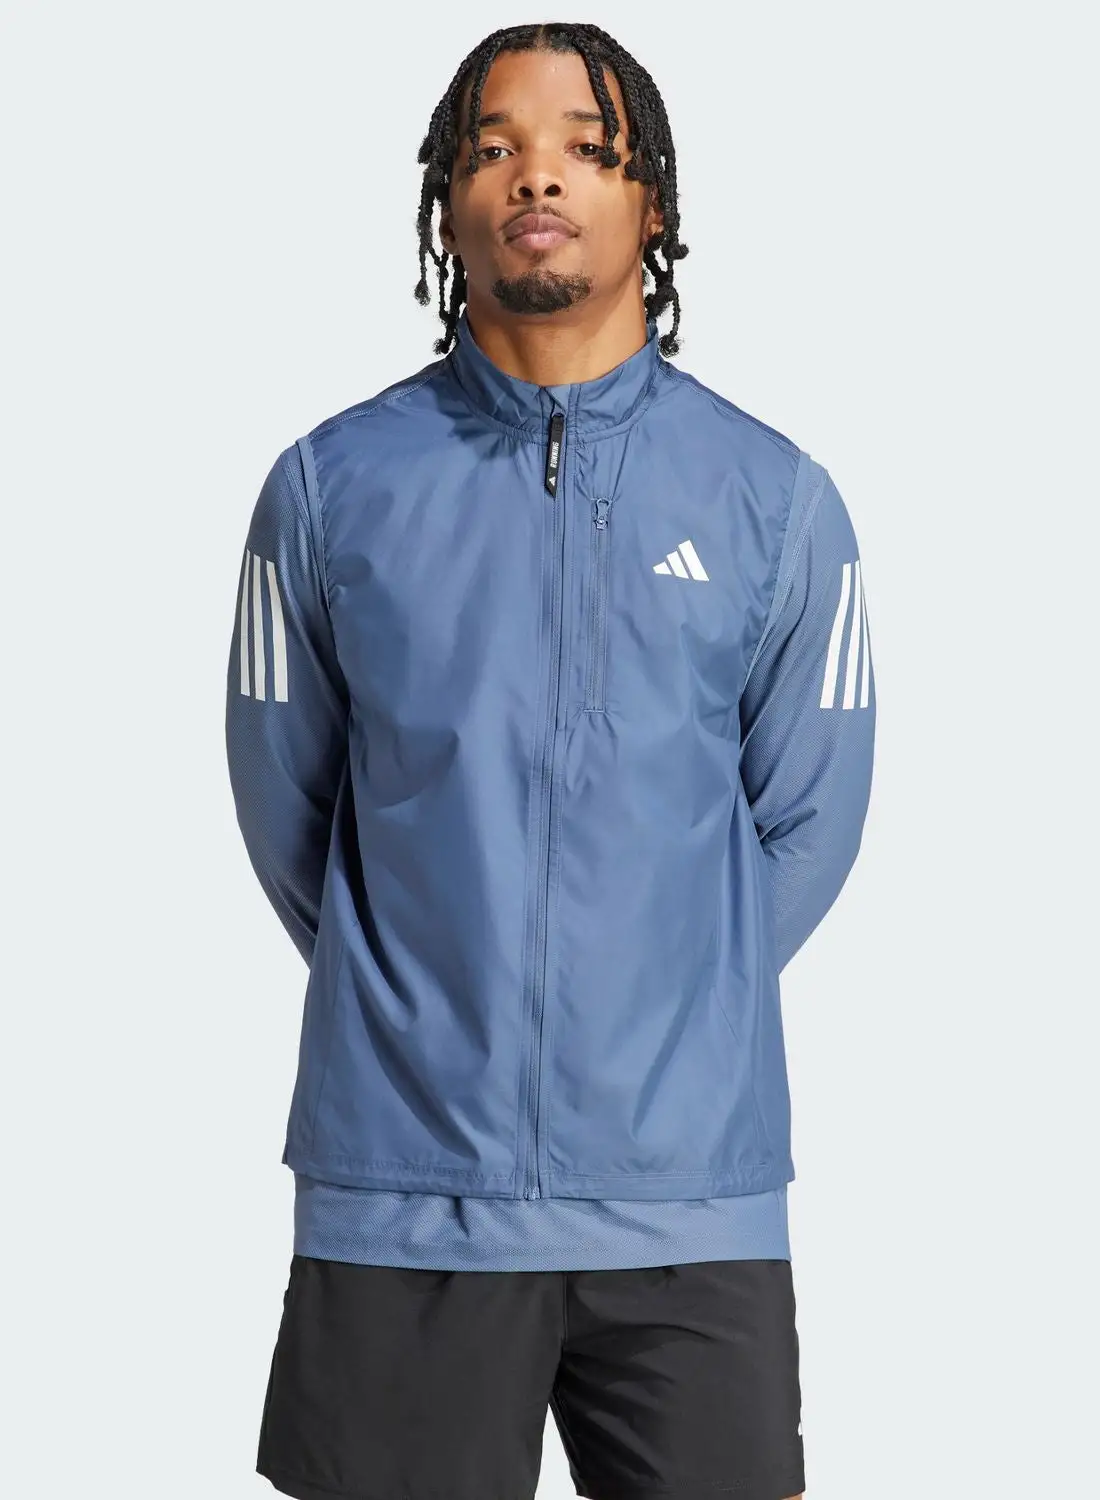 Adidas Own The Run Vest Jacket